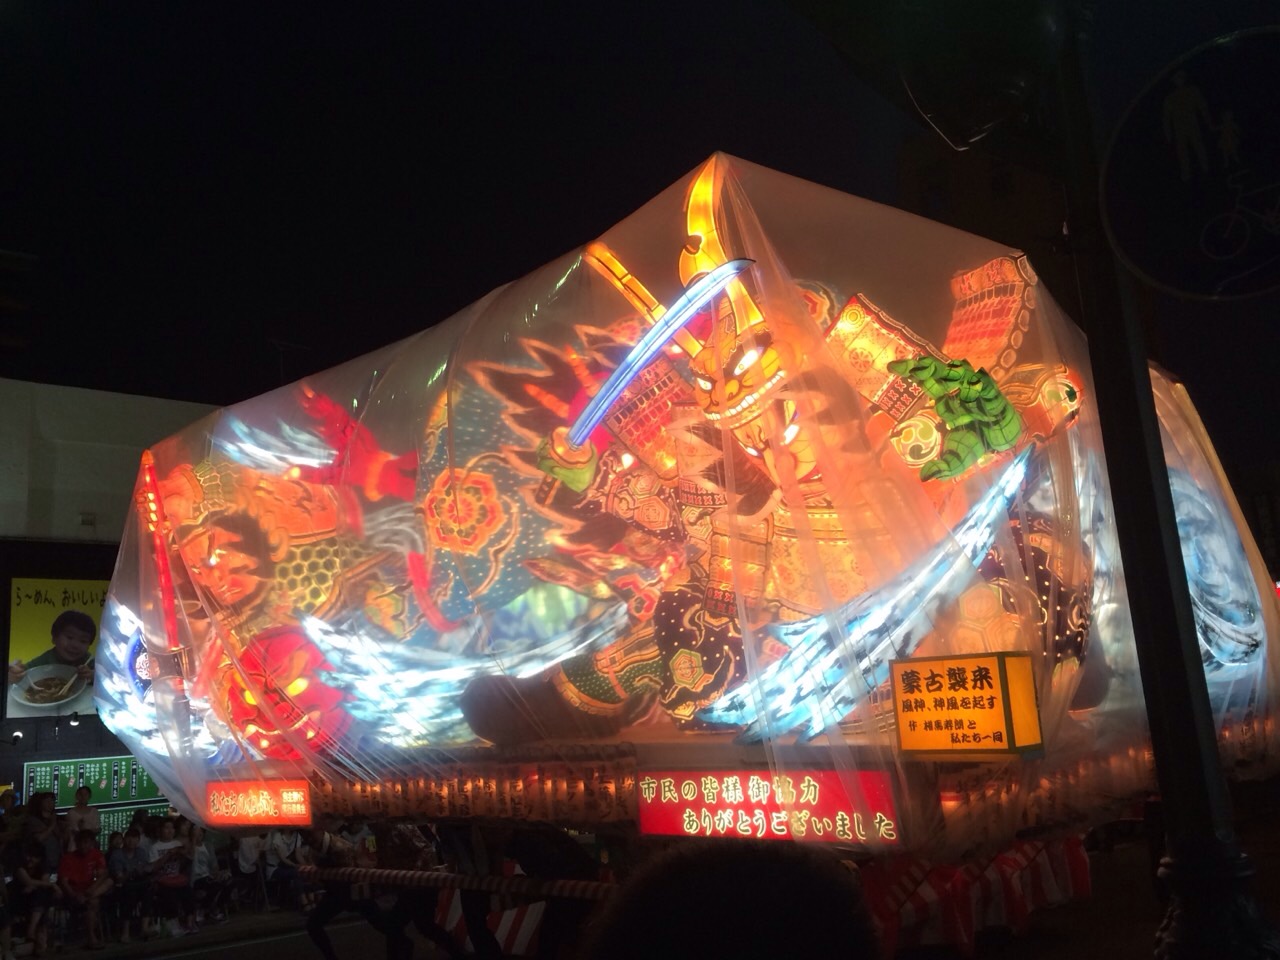 A colorful glowing float at the Nebuta Matsuri Festival.